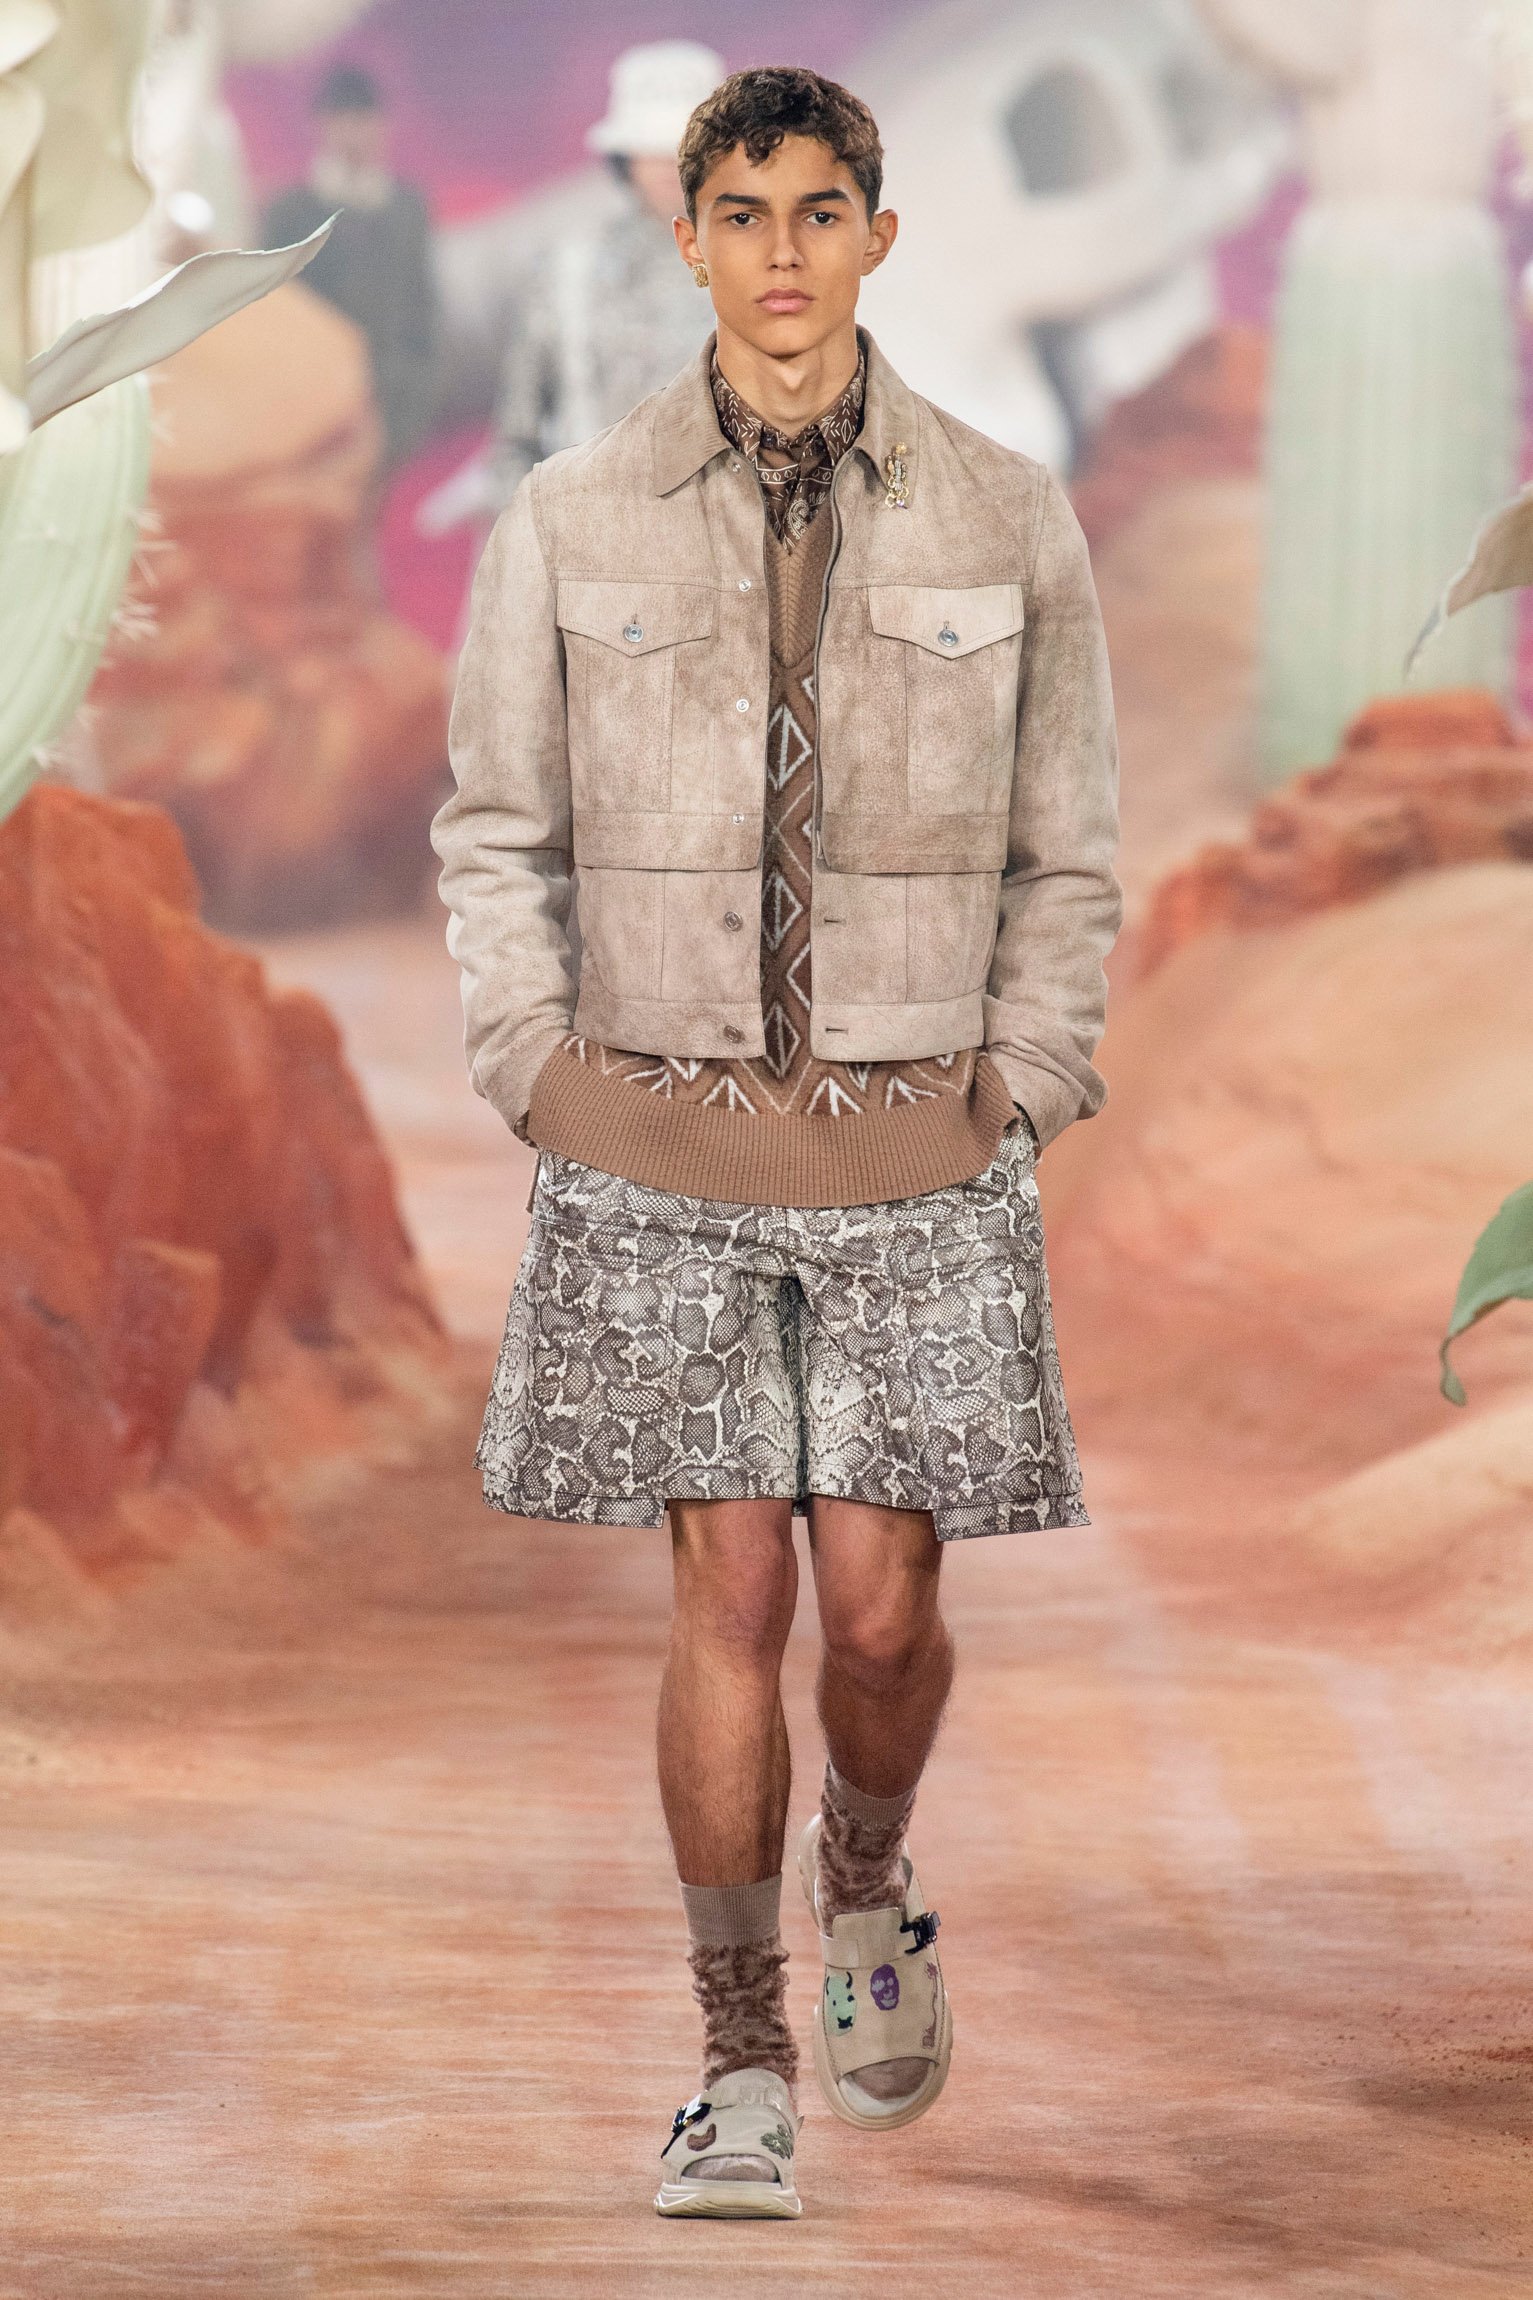 Travis Scott attending the Louis Vuitton Men Menswear Fall/Winter